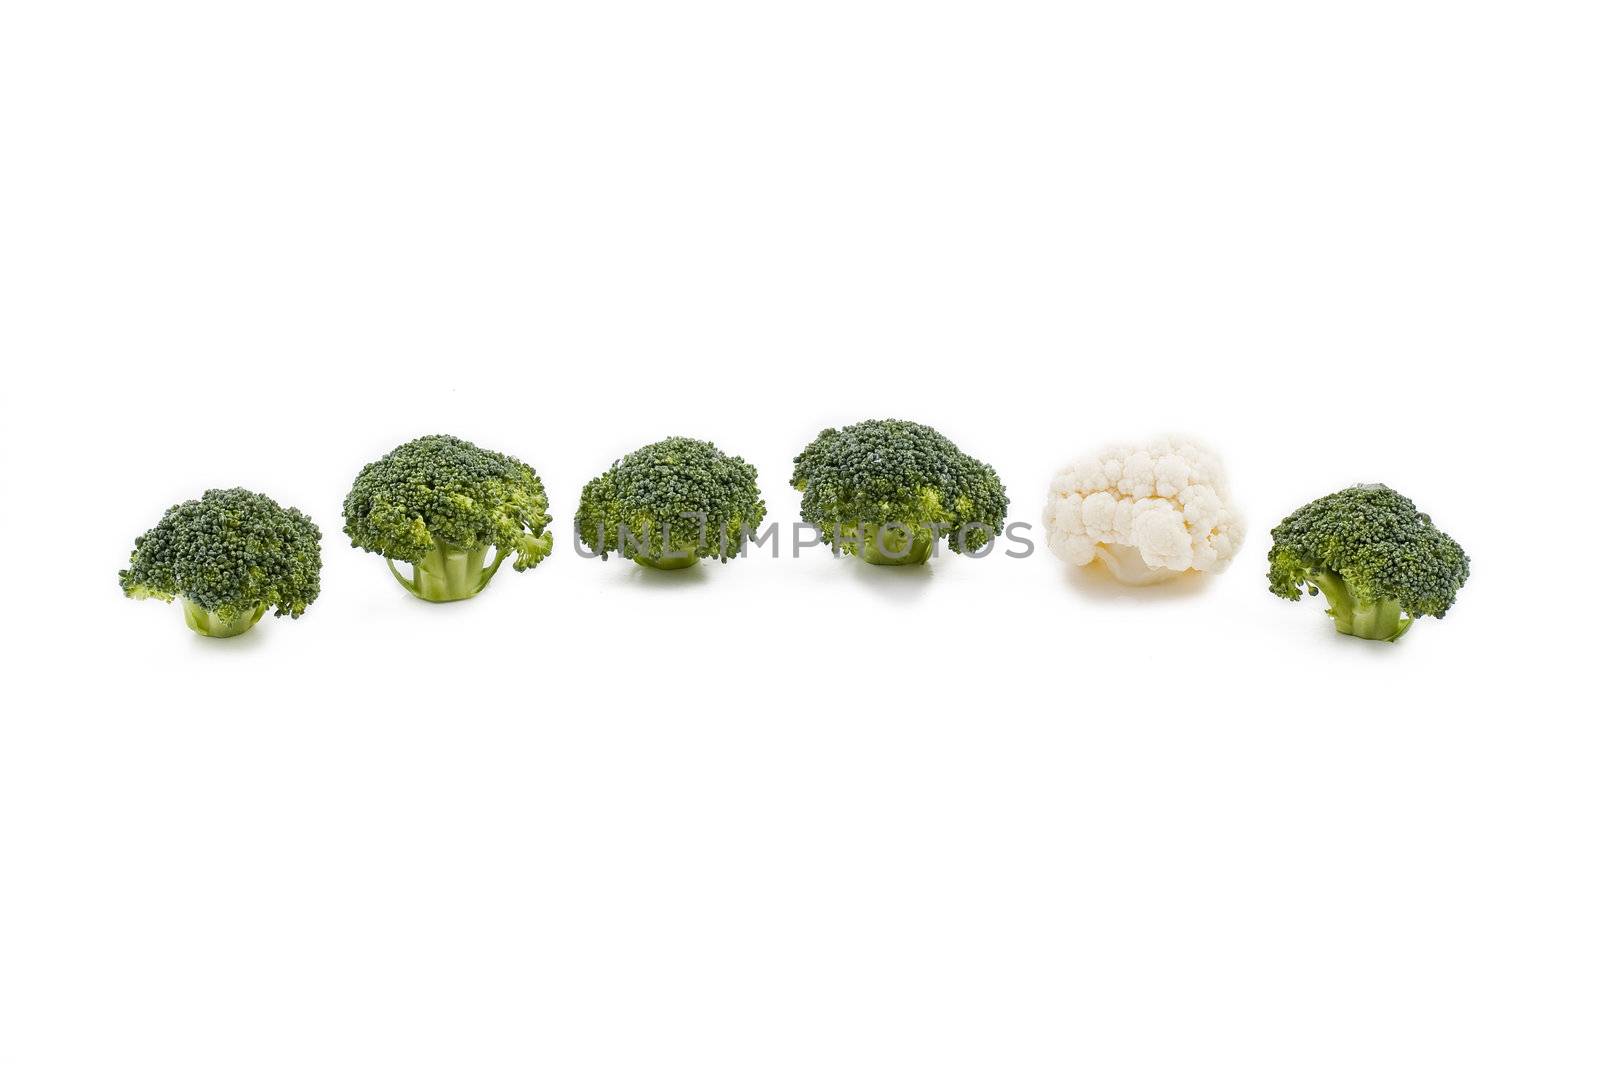 Broccoli and cauliflower by caldix